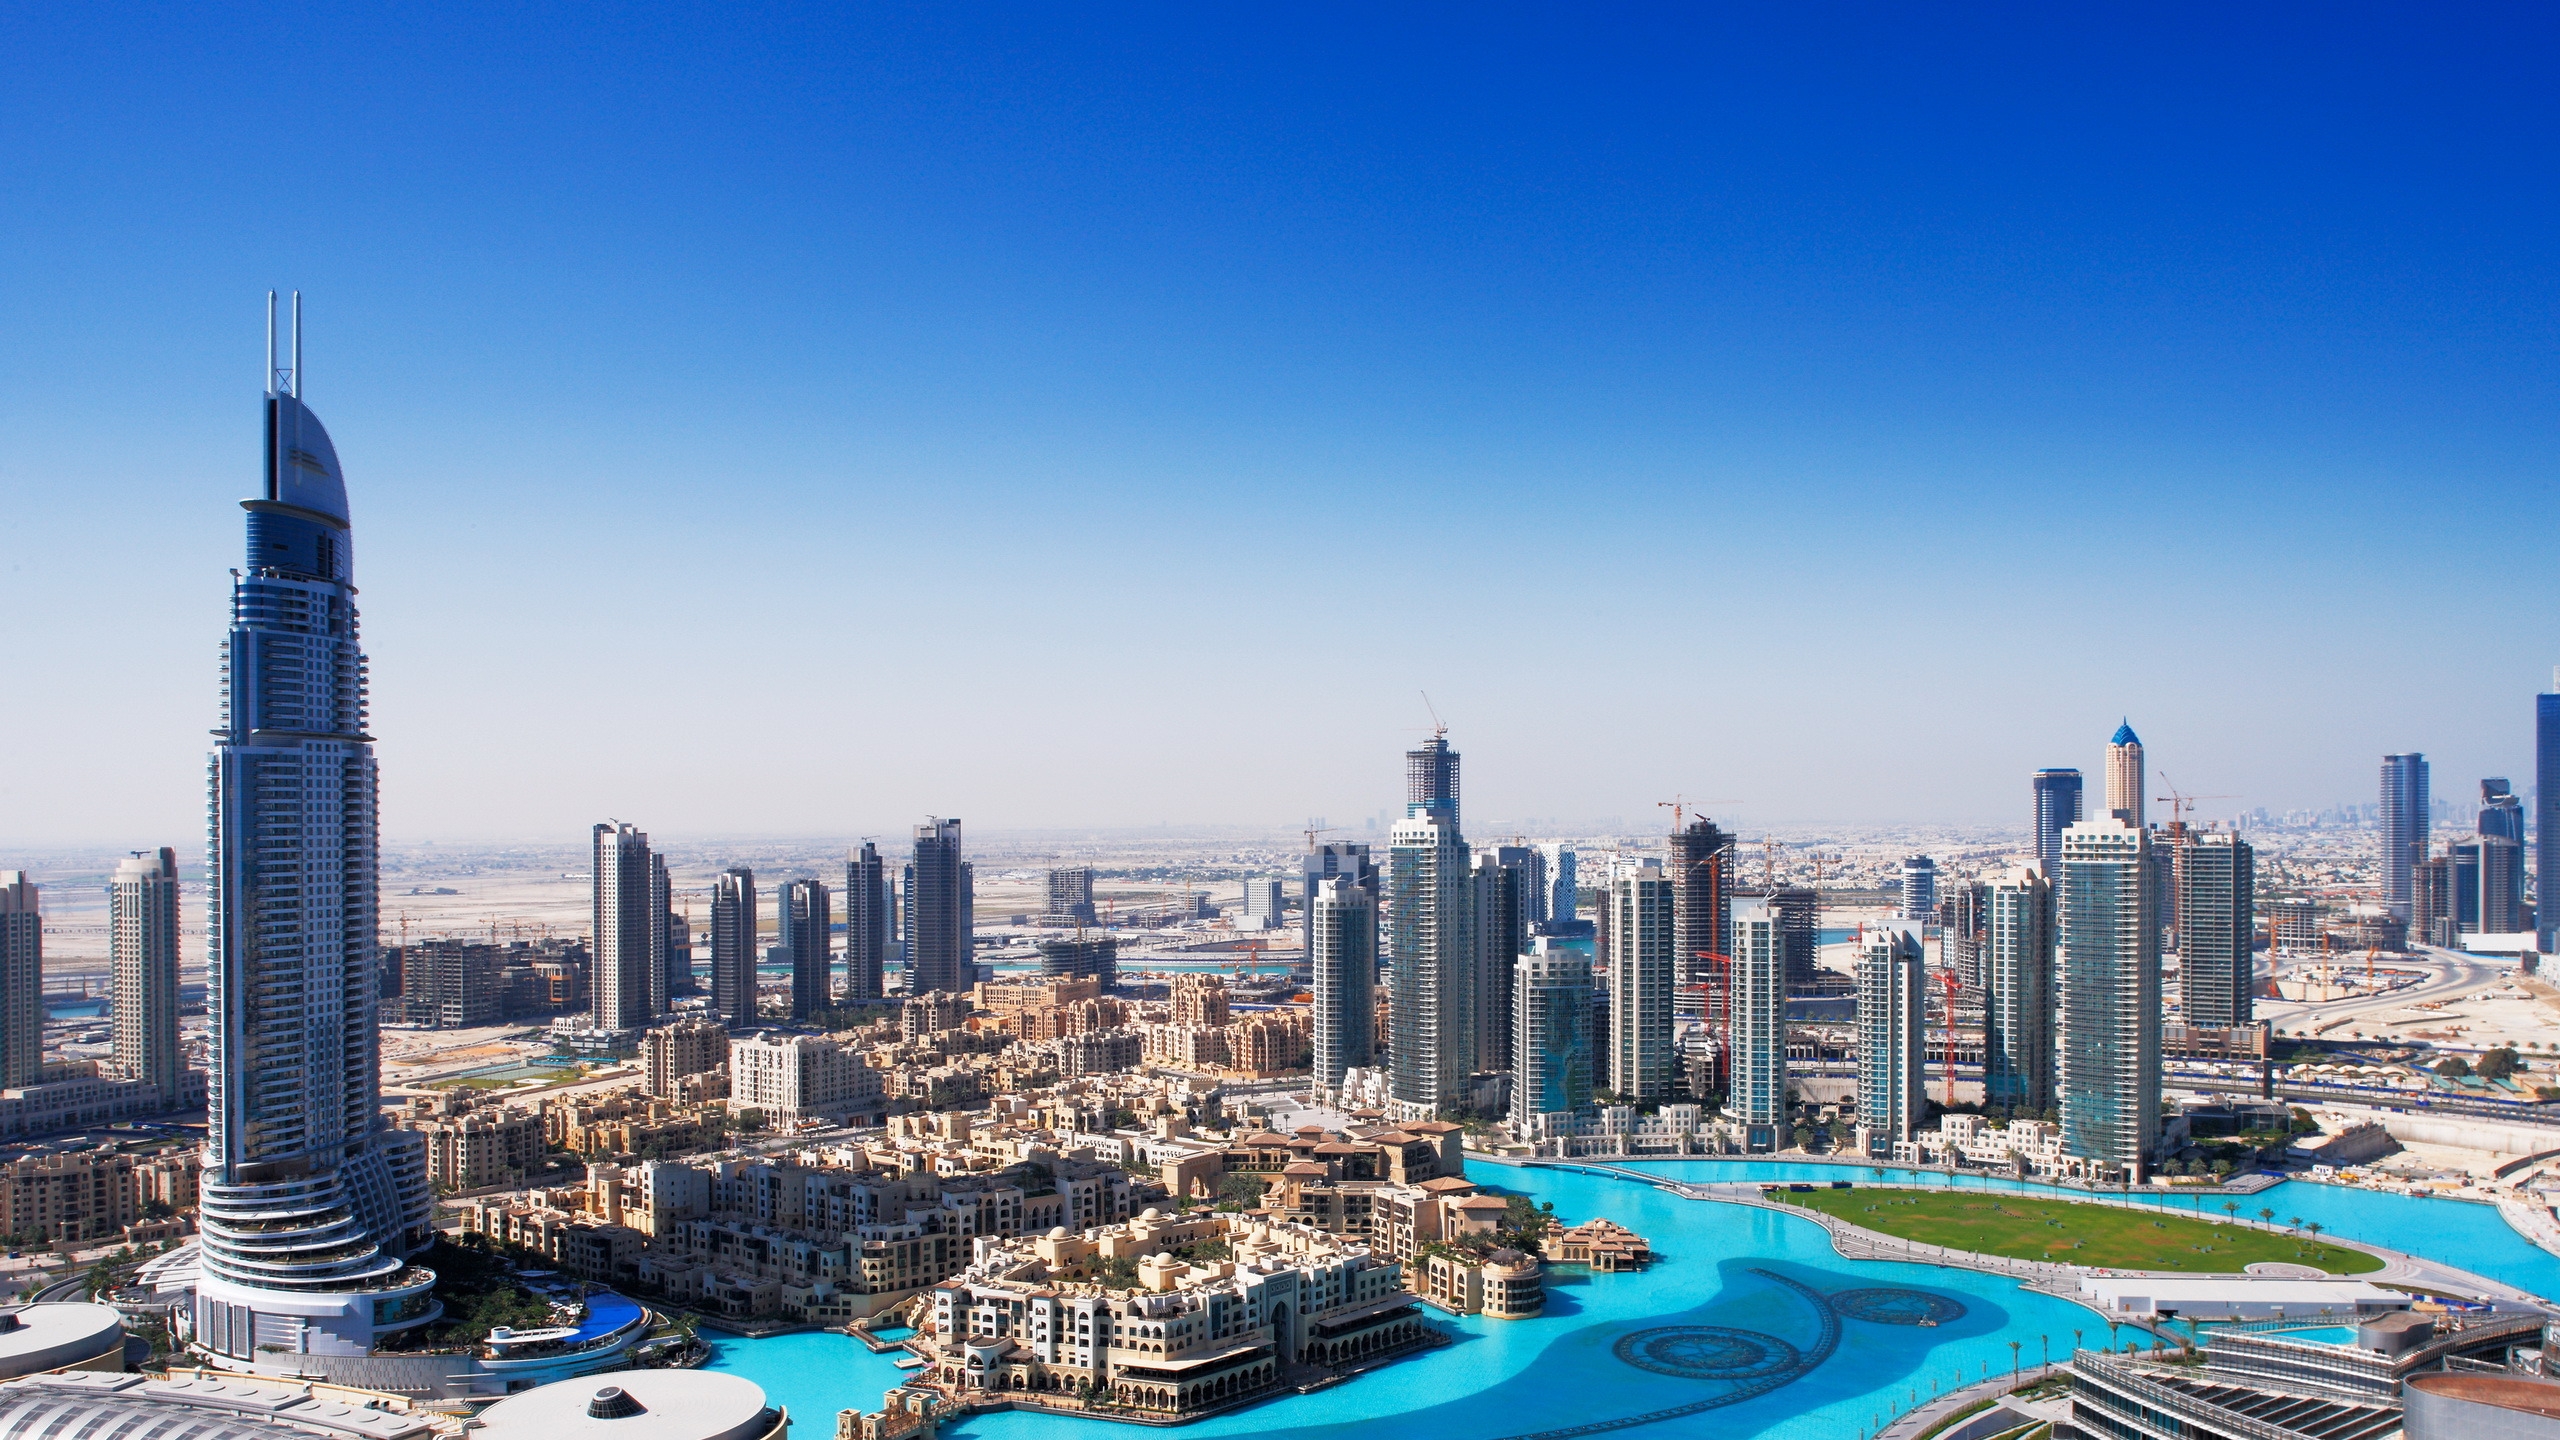 Dubai Overview for 2560x1440 HDTV resolution